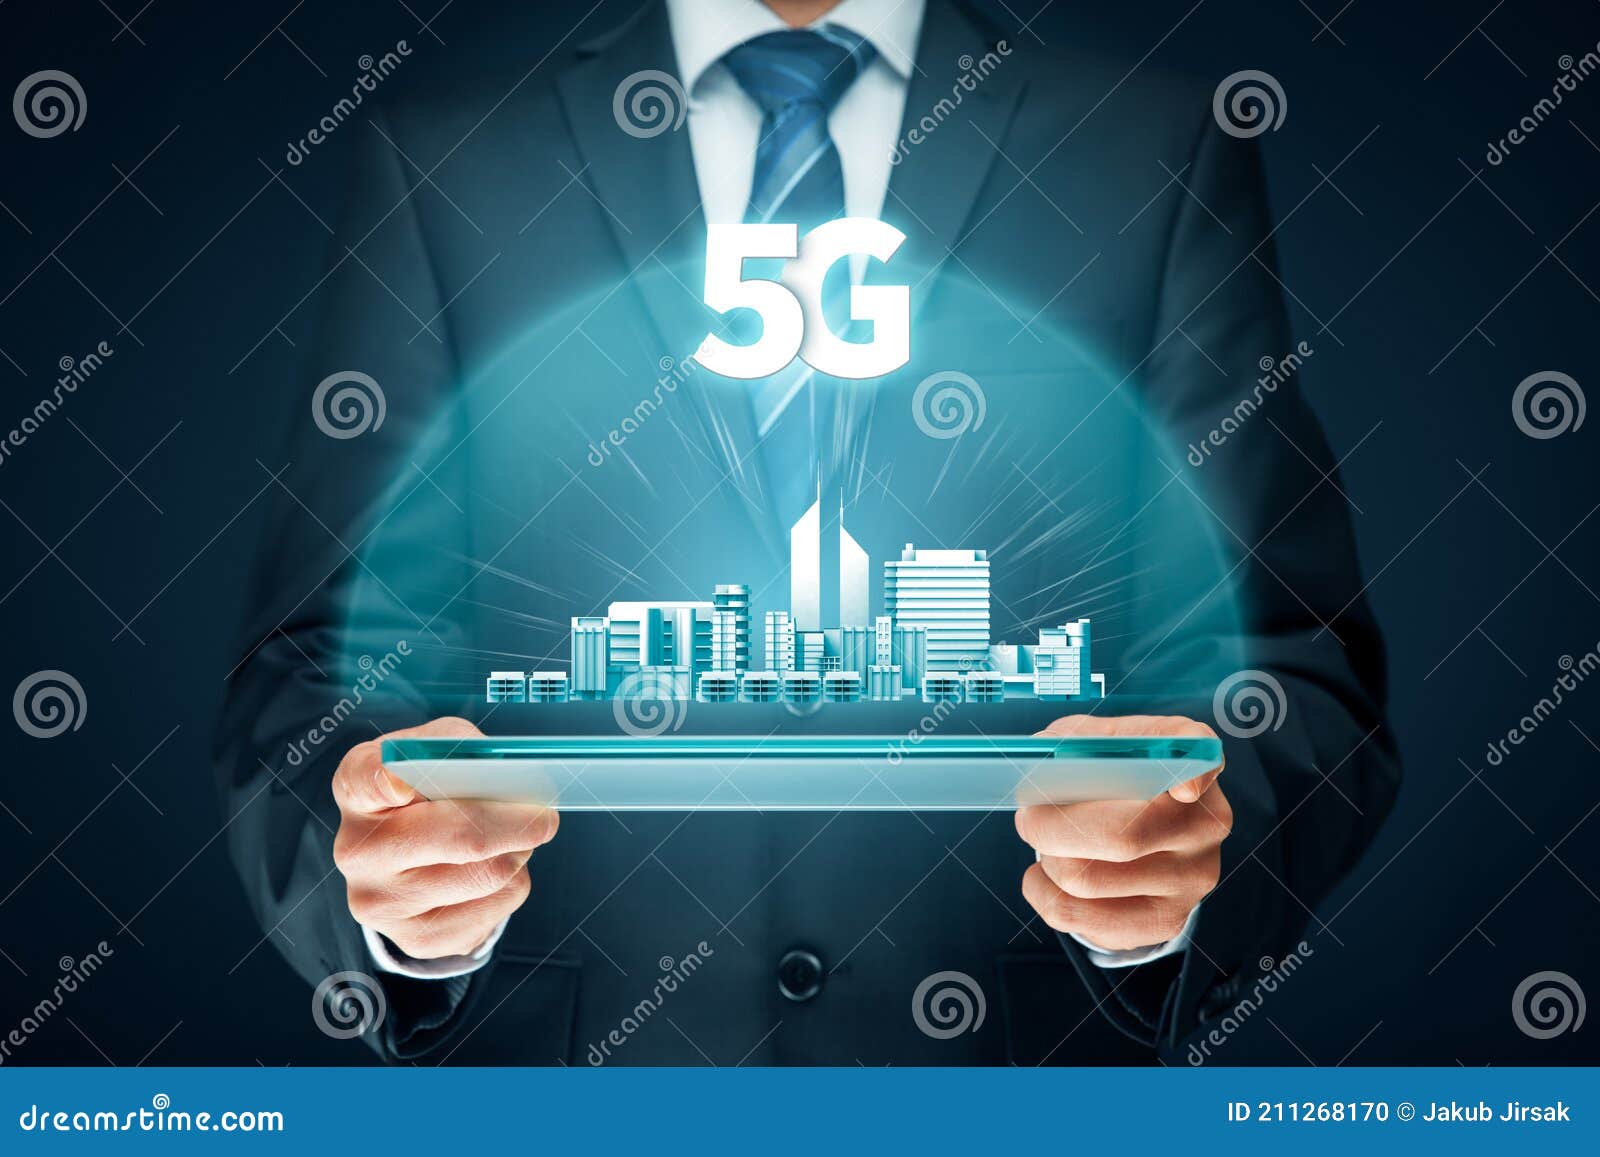 5g internet connection digital tablet concept